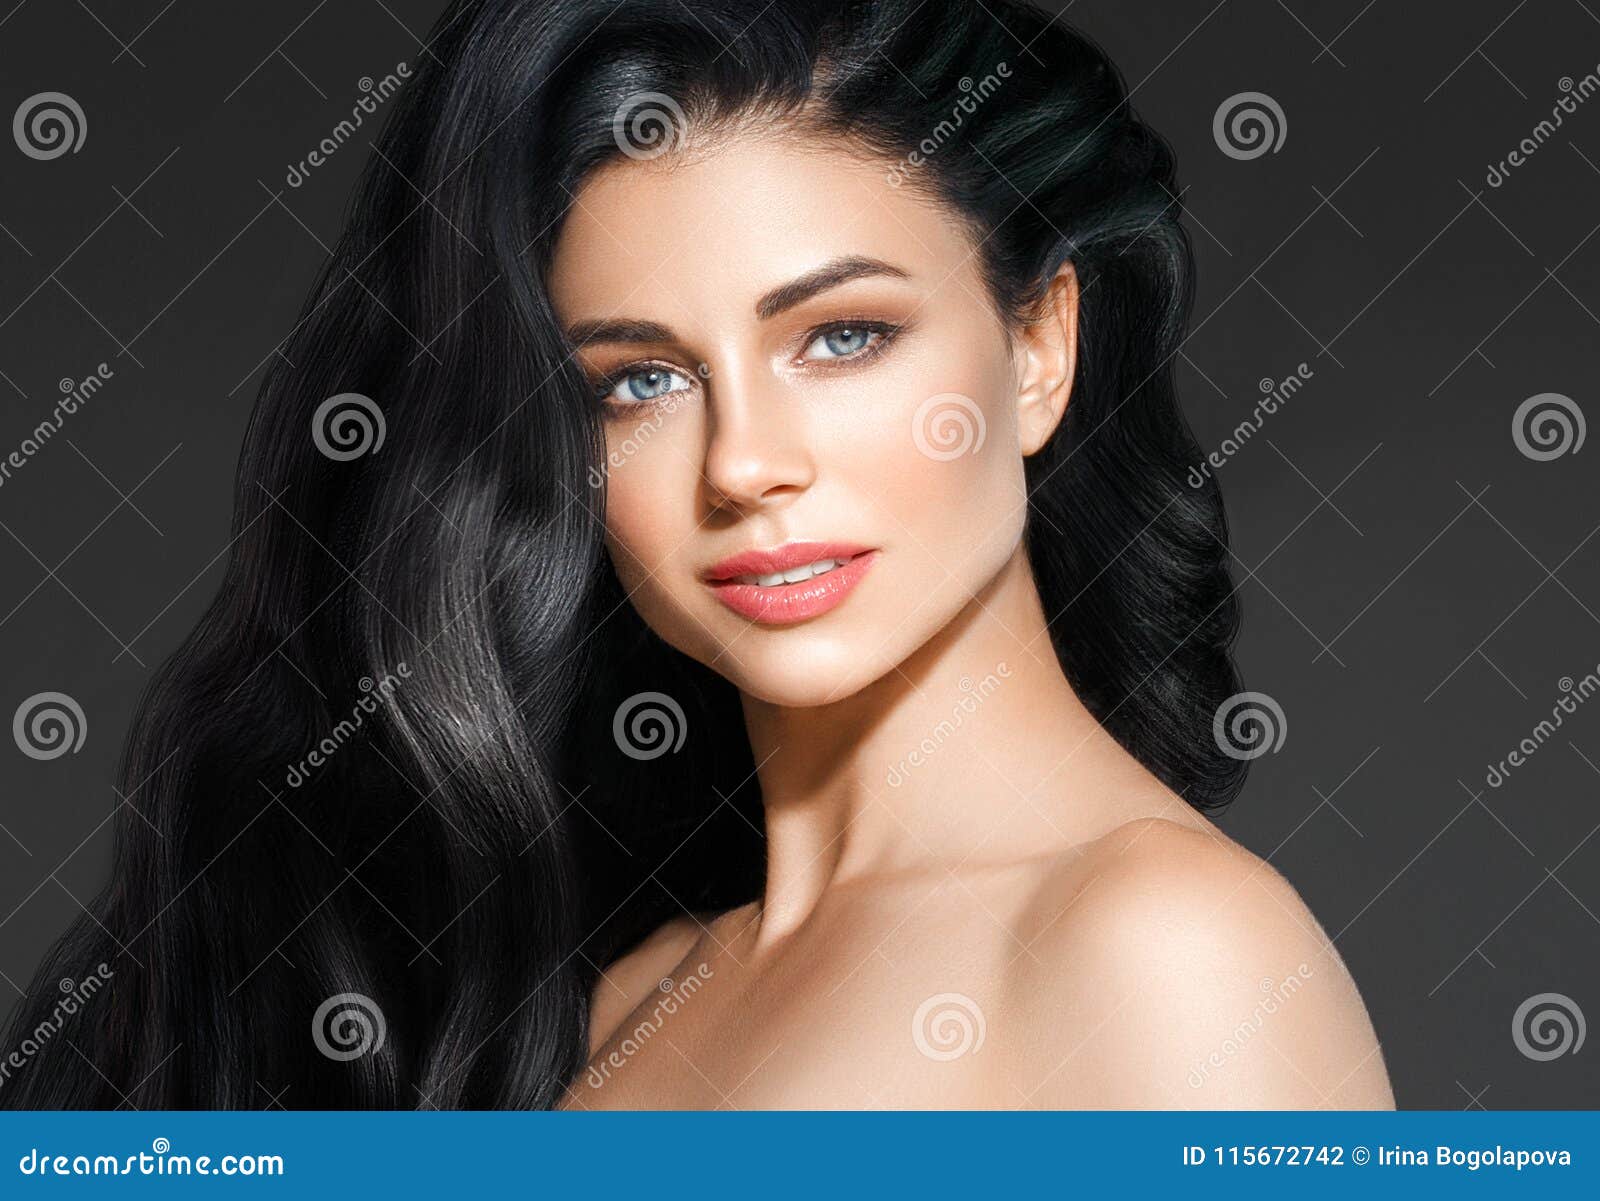 Black Hair Woman. Beautiful Brunette Hairstyle Fashion Portrait Stock Photo  - Image of blonde, closeup: 115672742